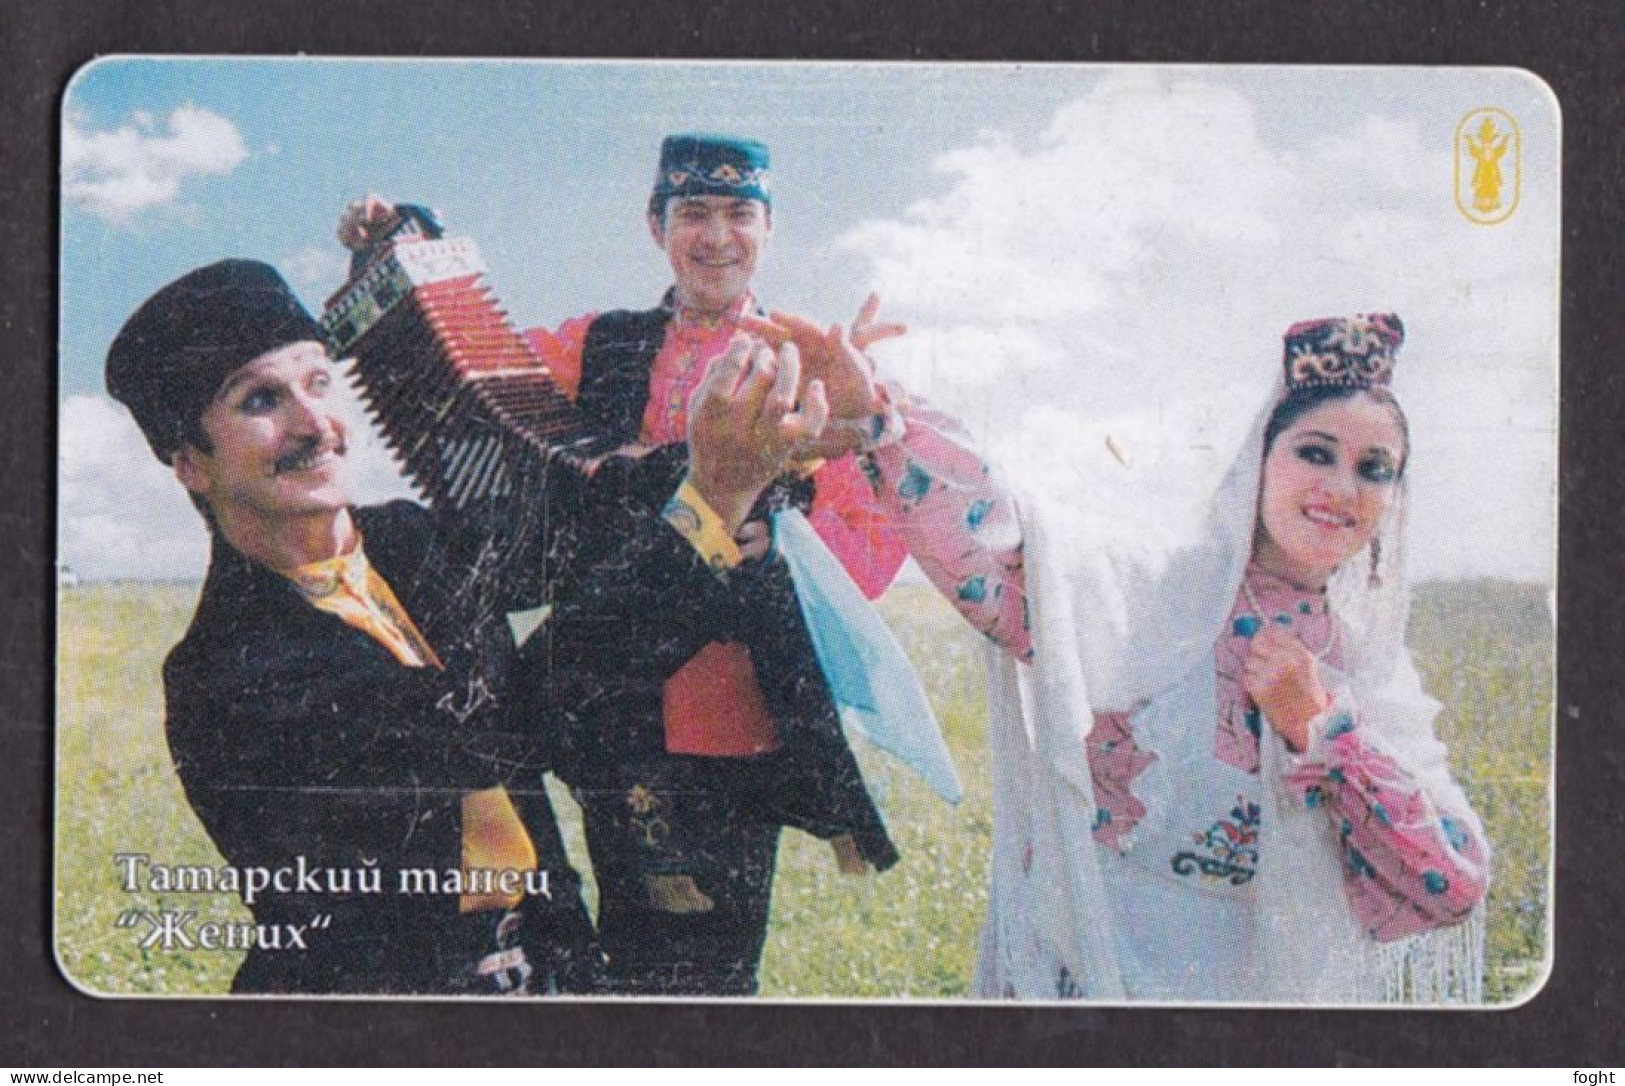 2002 Russia Bashinformsvyaz-Ufa,Tatar Dance "Bridegroom",90 Units Card,Col:RU-BIS-V-006 - Russia